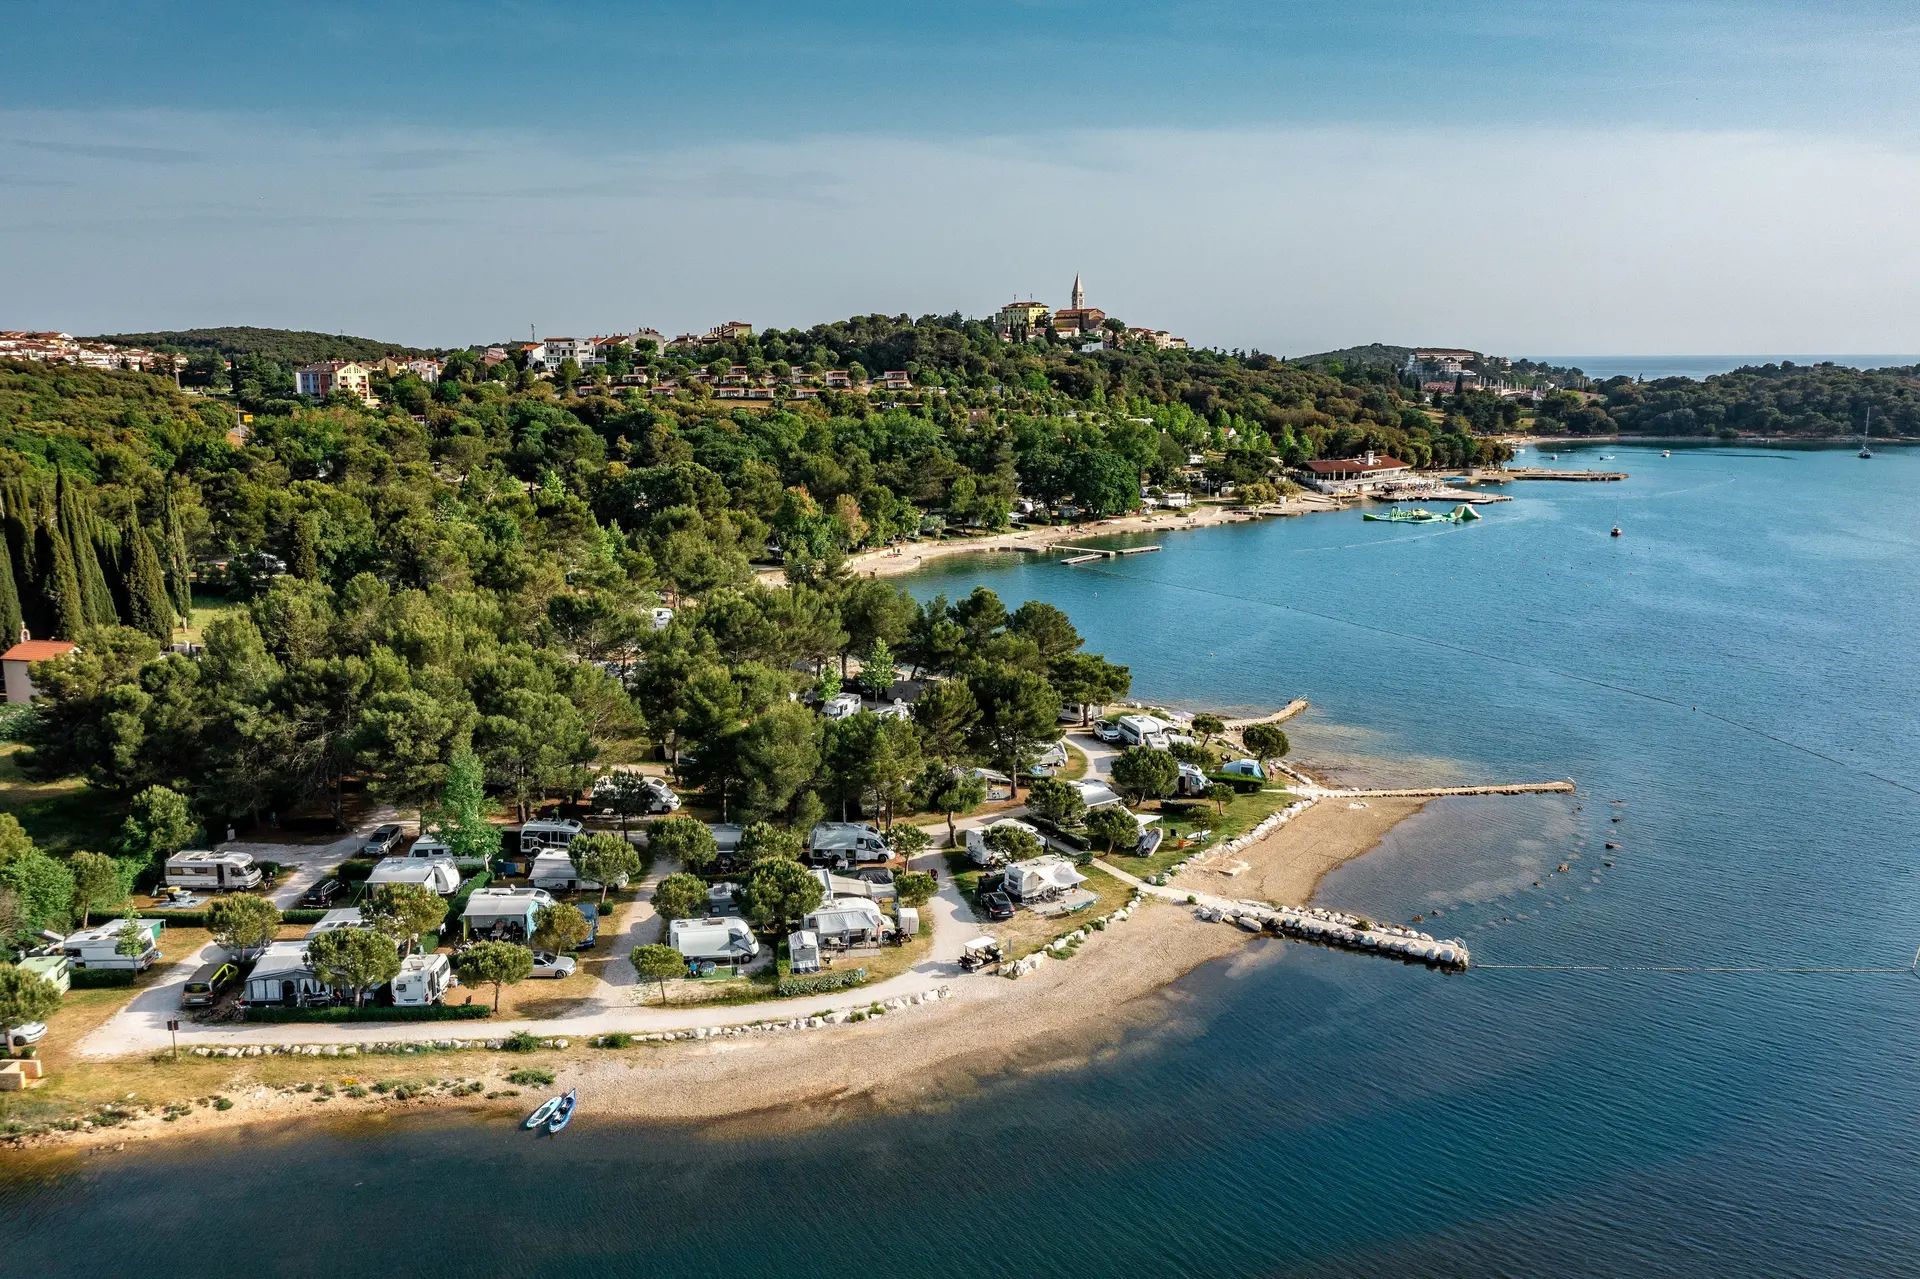 Orsera Camping - a nice campsite by the sea in Croatia